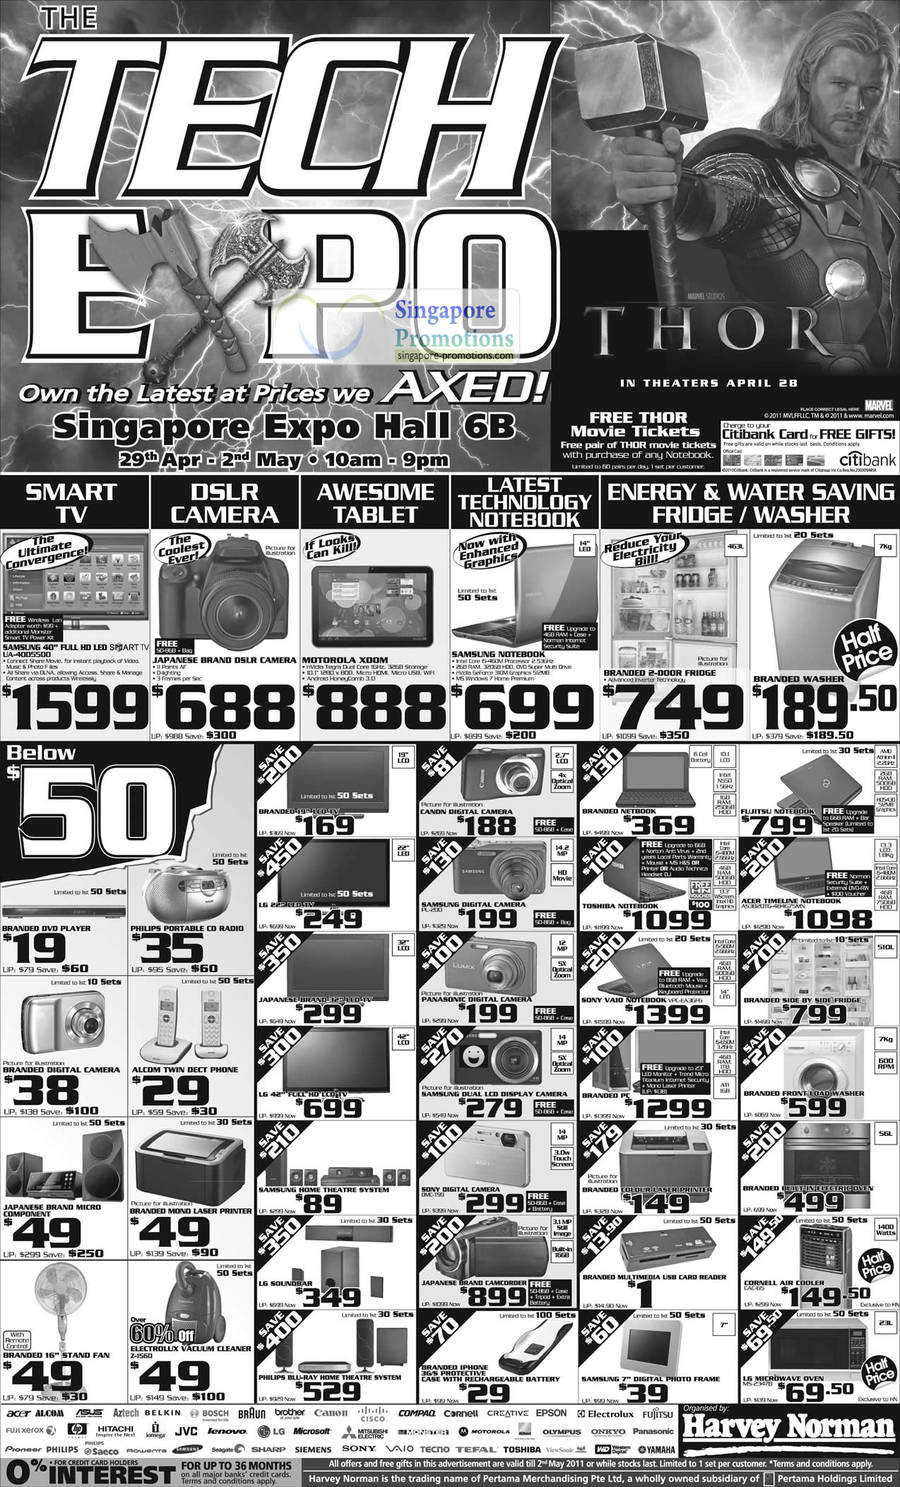 Limited Deals, TV, Digital Camera, Netbook, Fujitsu Notebook, Acer AS3820TG, Photo Frame, Etc